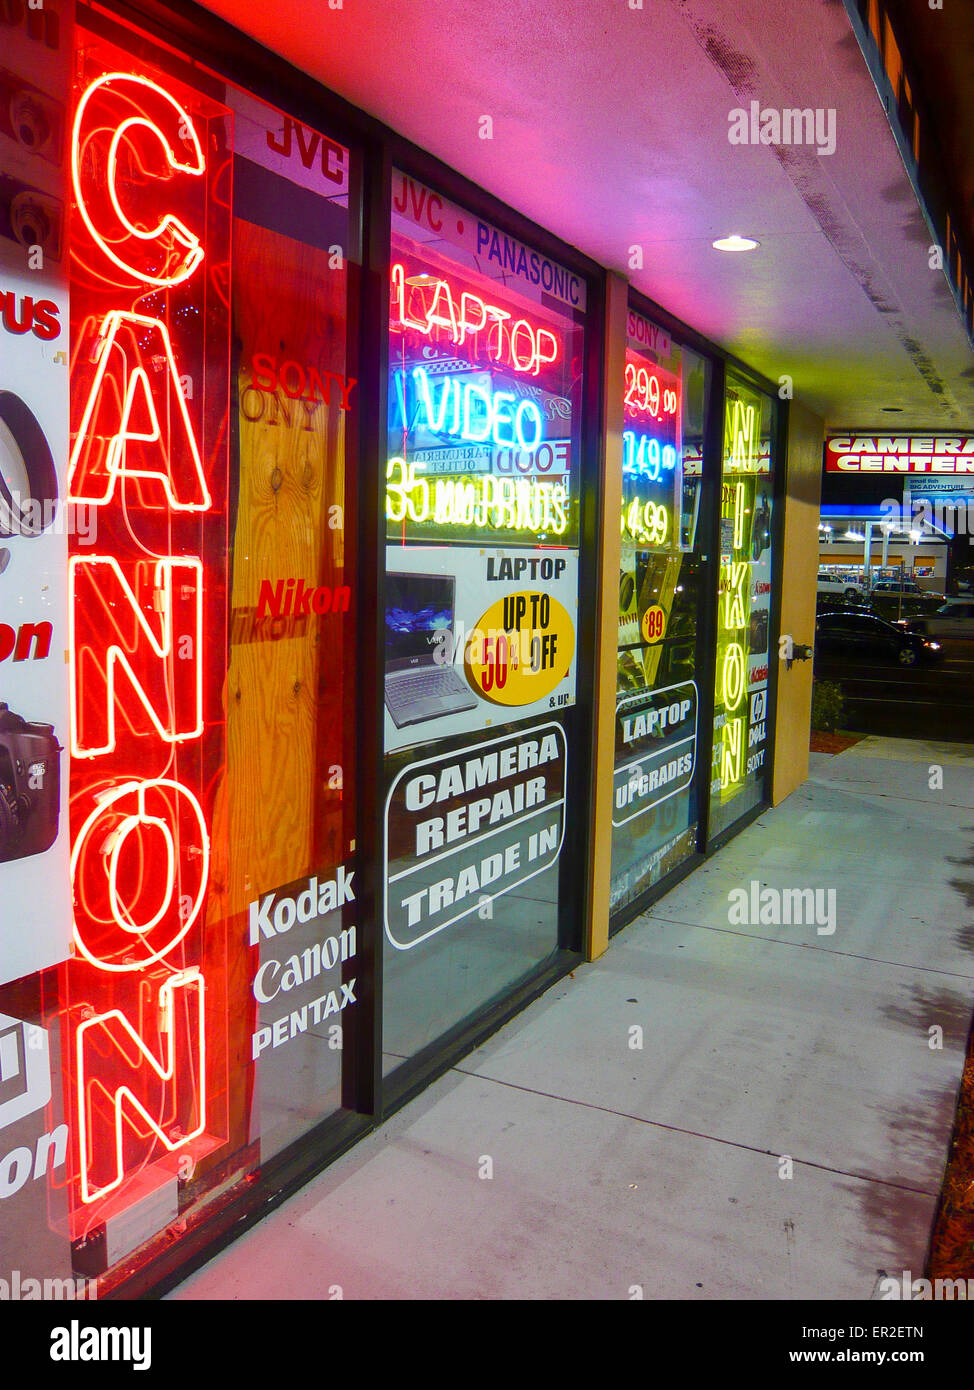 Camera shop selling Canon and Nikon equipment. Stock Photo